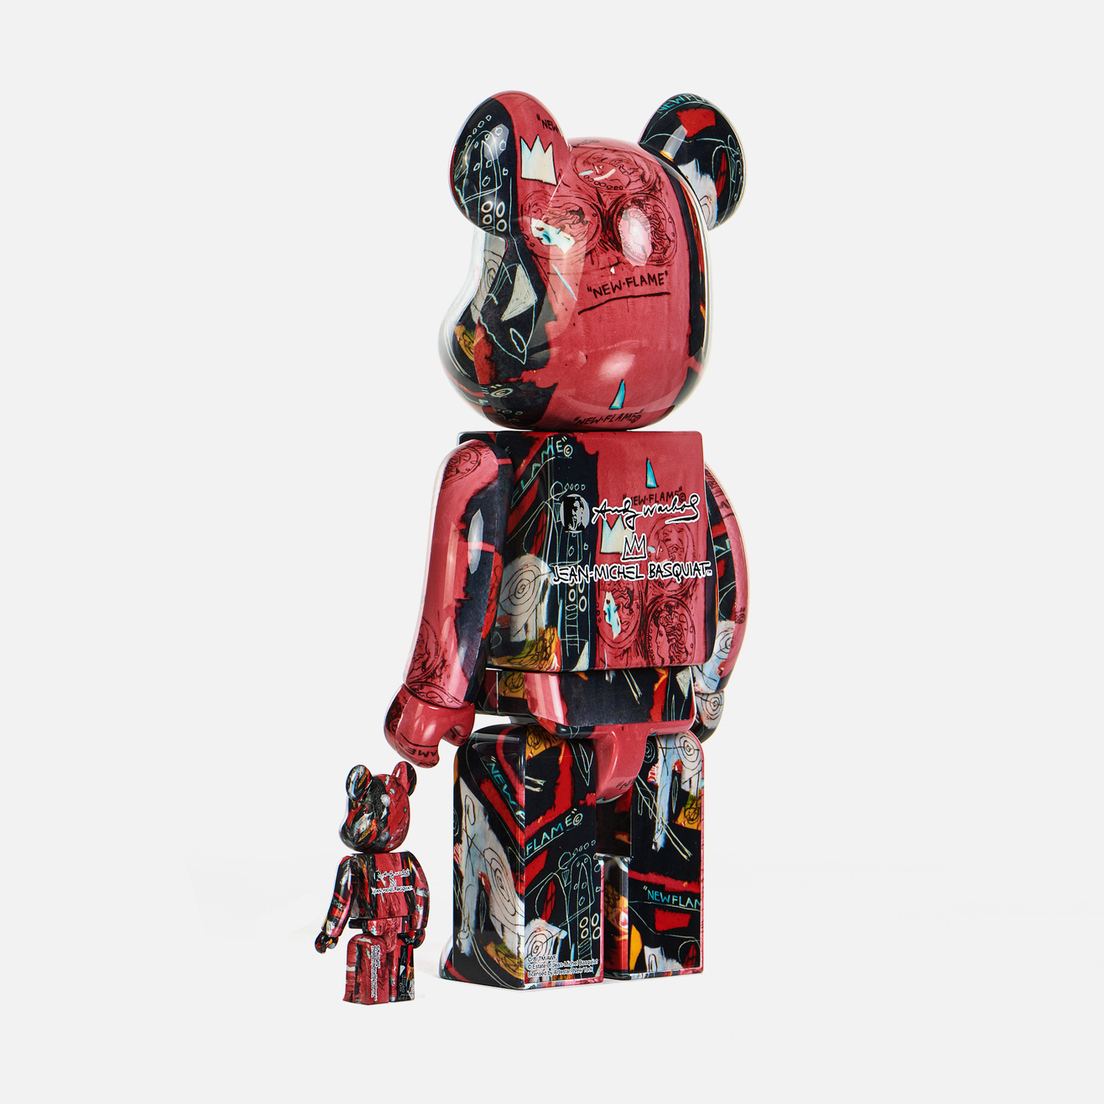 Medicom Toy Игрушка Andy Warhol x Jean-Michel Basquiat 1 100% & 400%